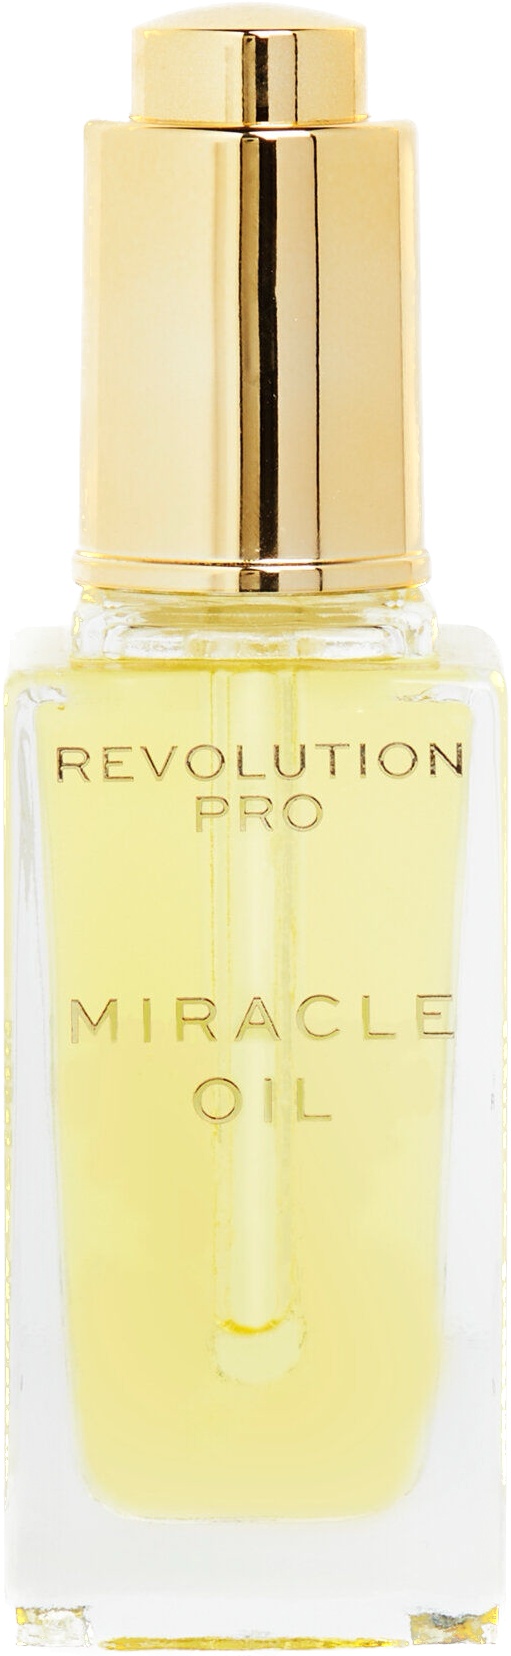 Revolution Pro Miracle Oil